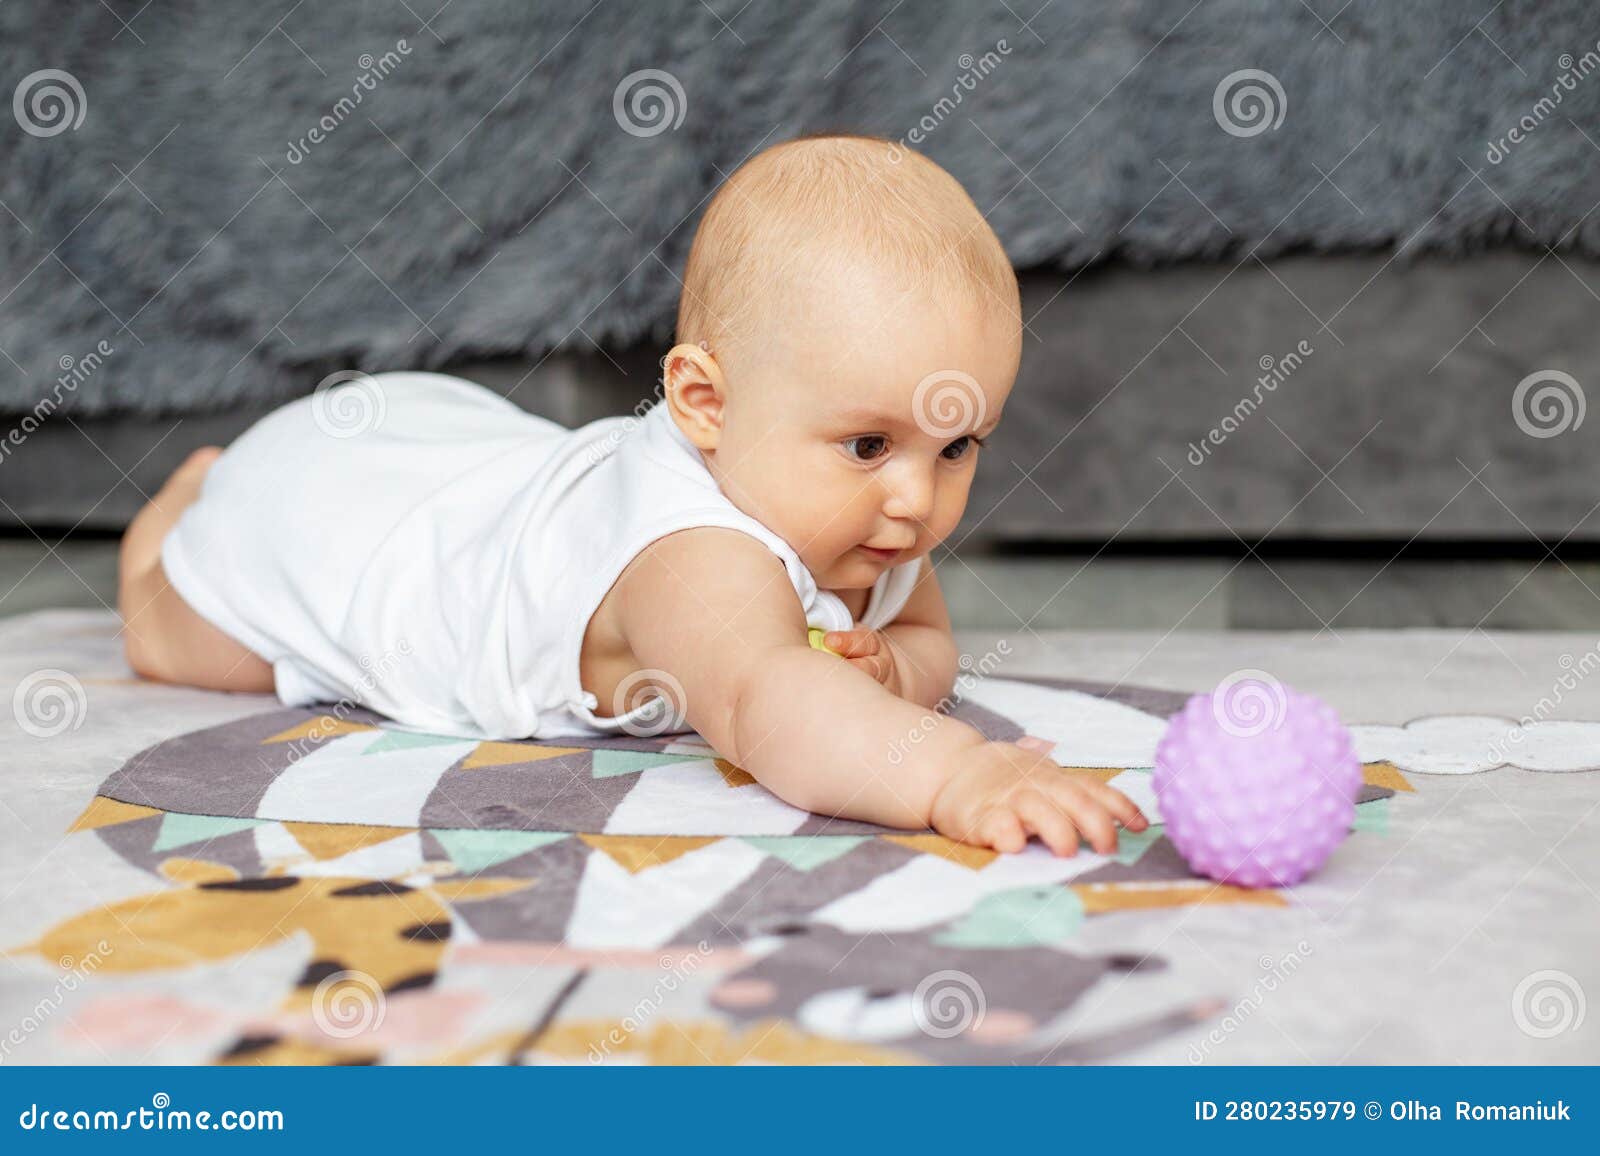 baby creep on floor of nursery grabbing colorful ball. baby development. sensory experience